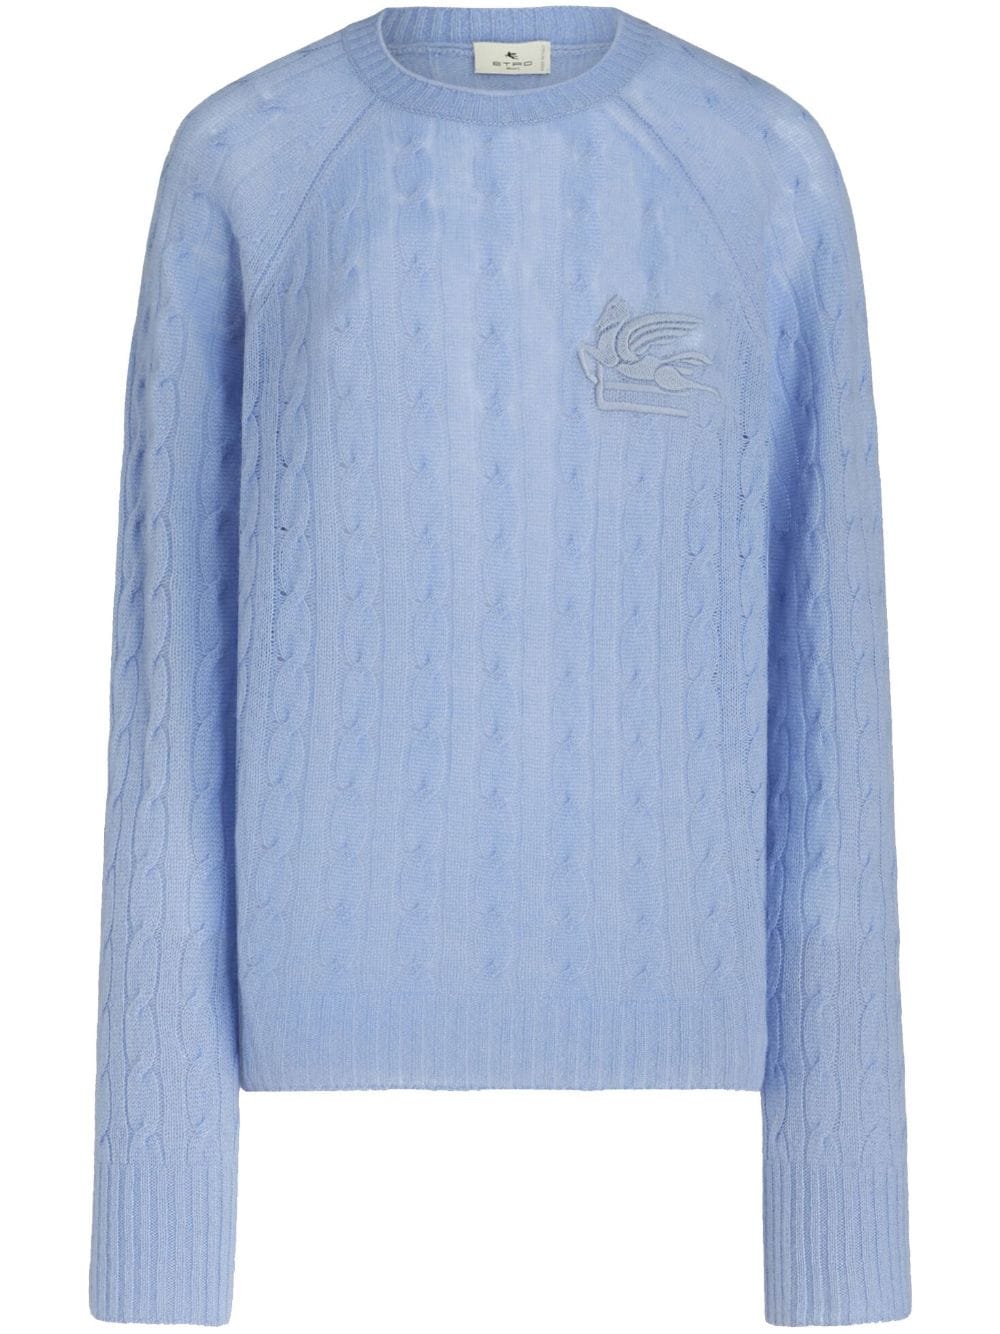 ETRO Blue Cashmere Crew-Neck Sweater for Women - FW23